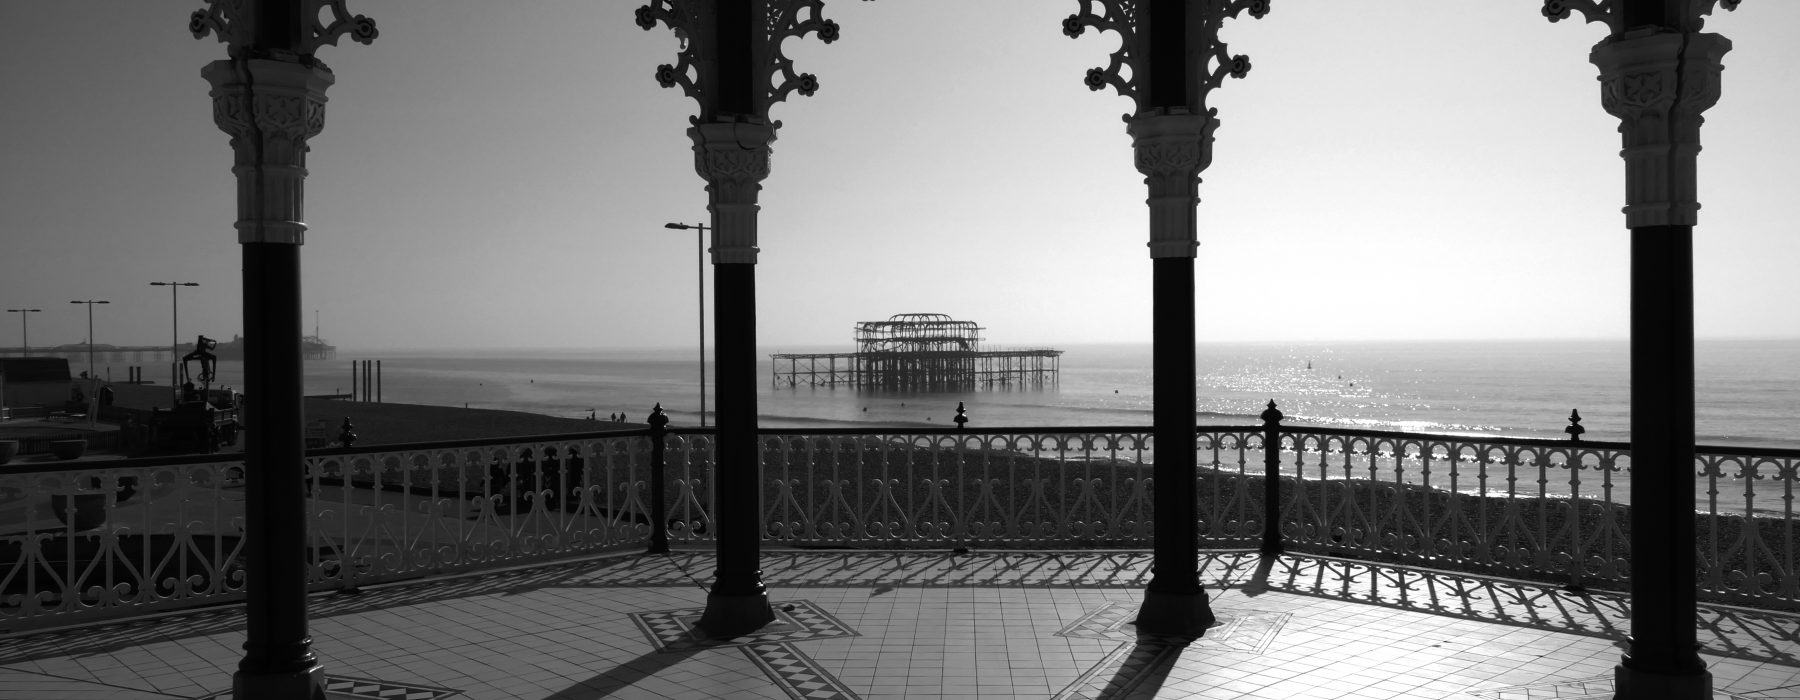 Brighton East Sussex bandstand Image: Shutterstock.com